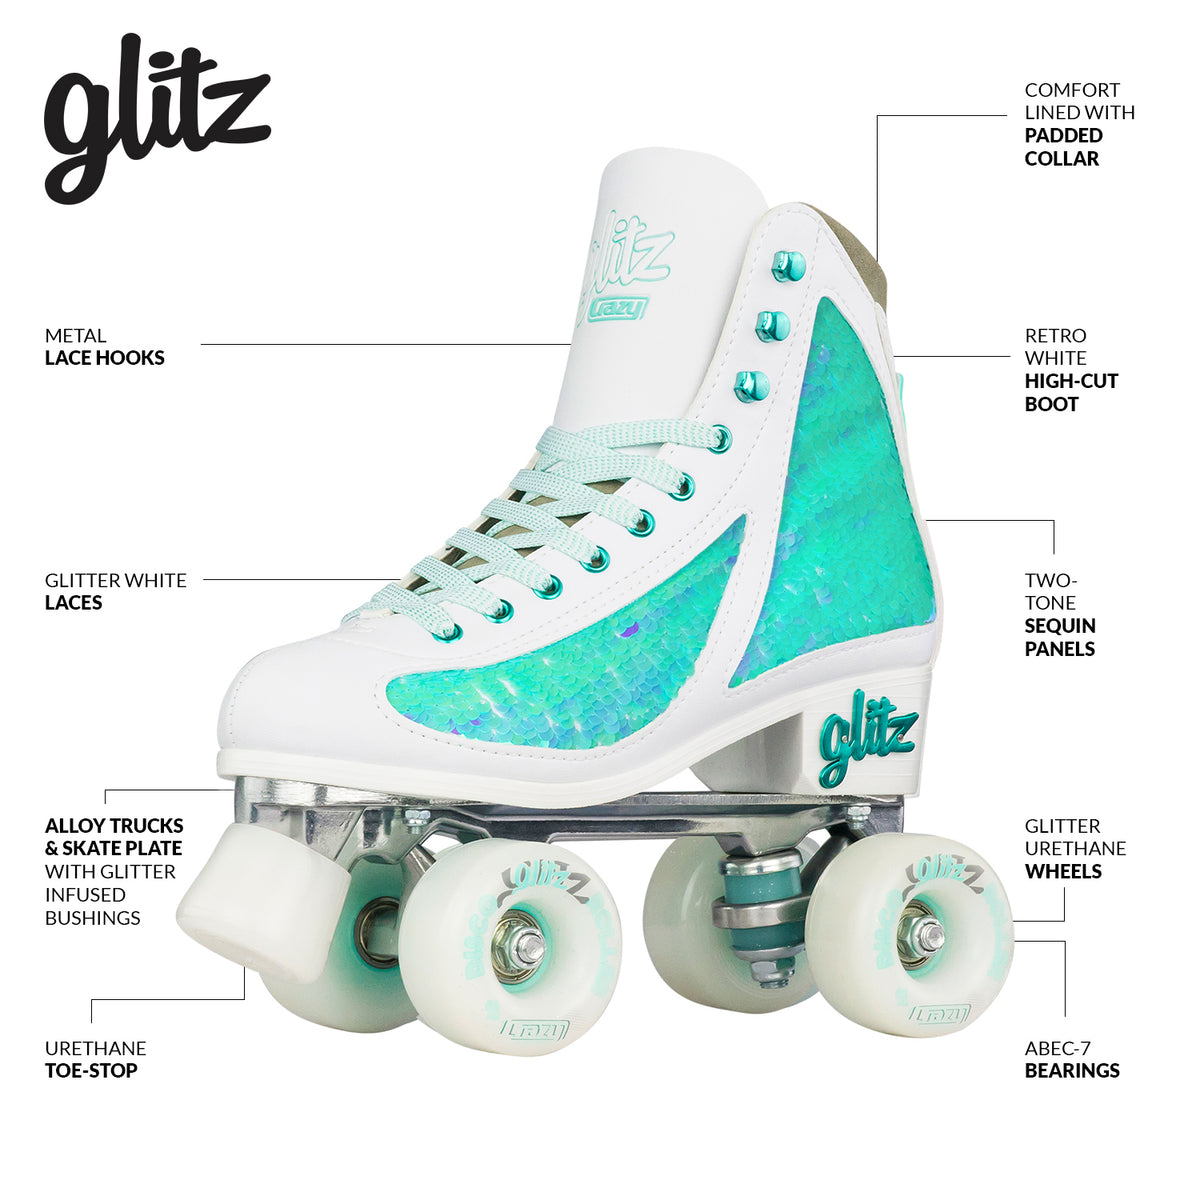 Crazy Disco Glitz Turquoise - Adult Roller Skates